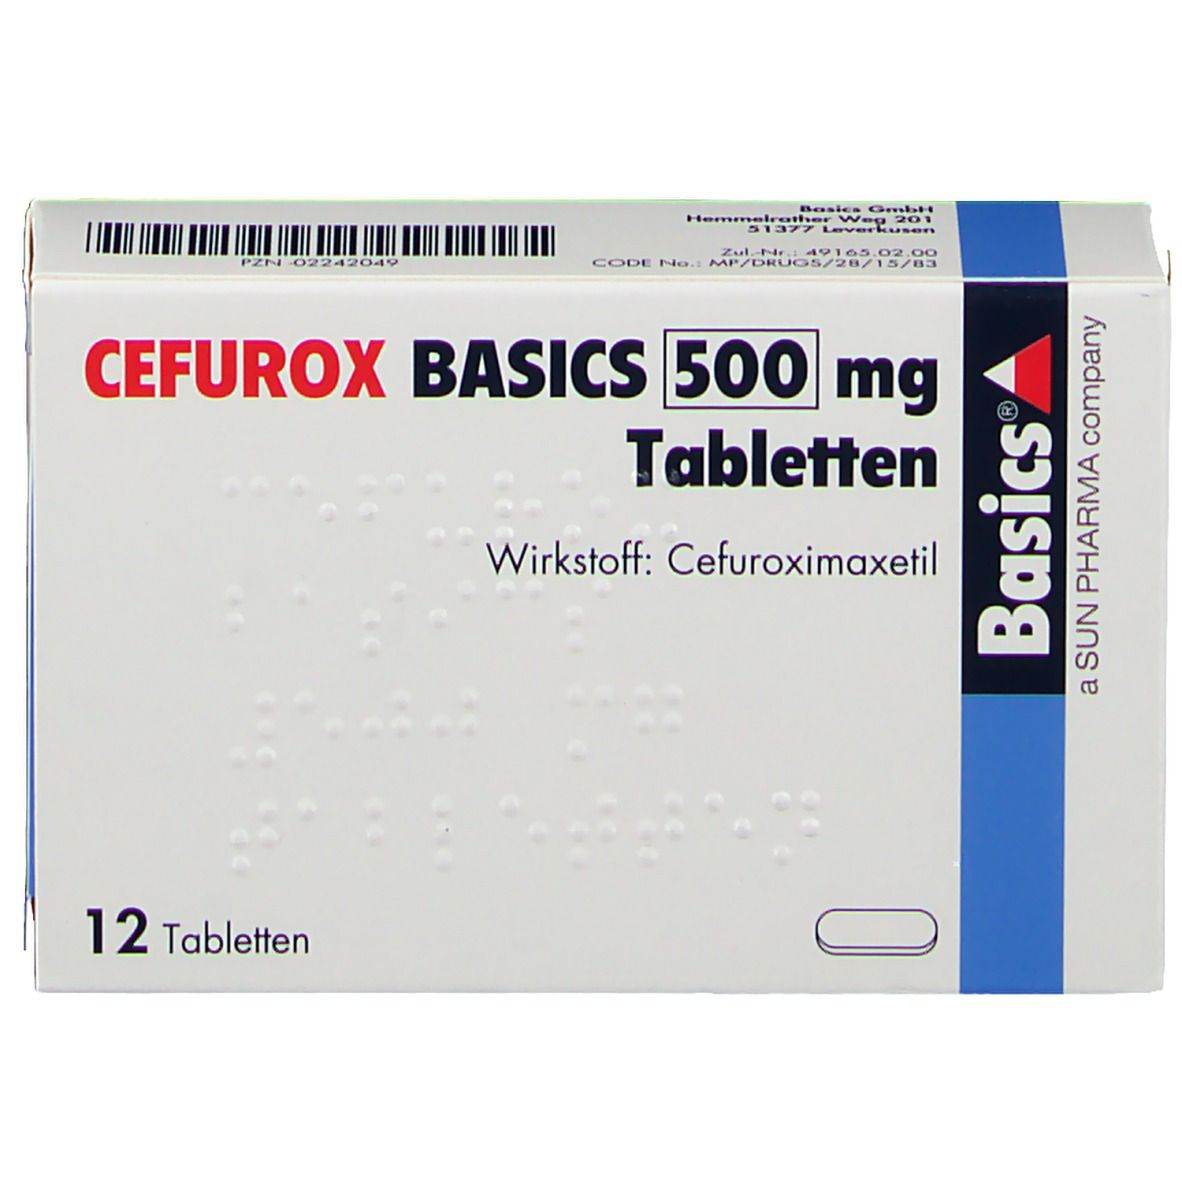 CEFUROX BASICS 500 mg